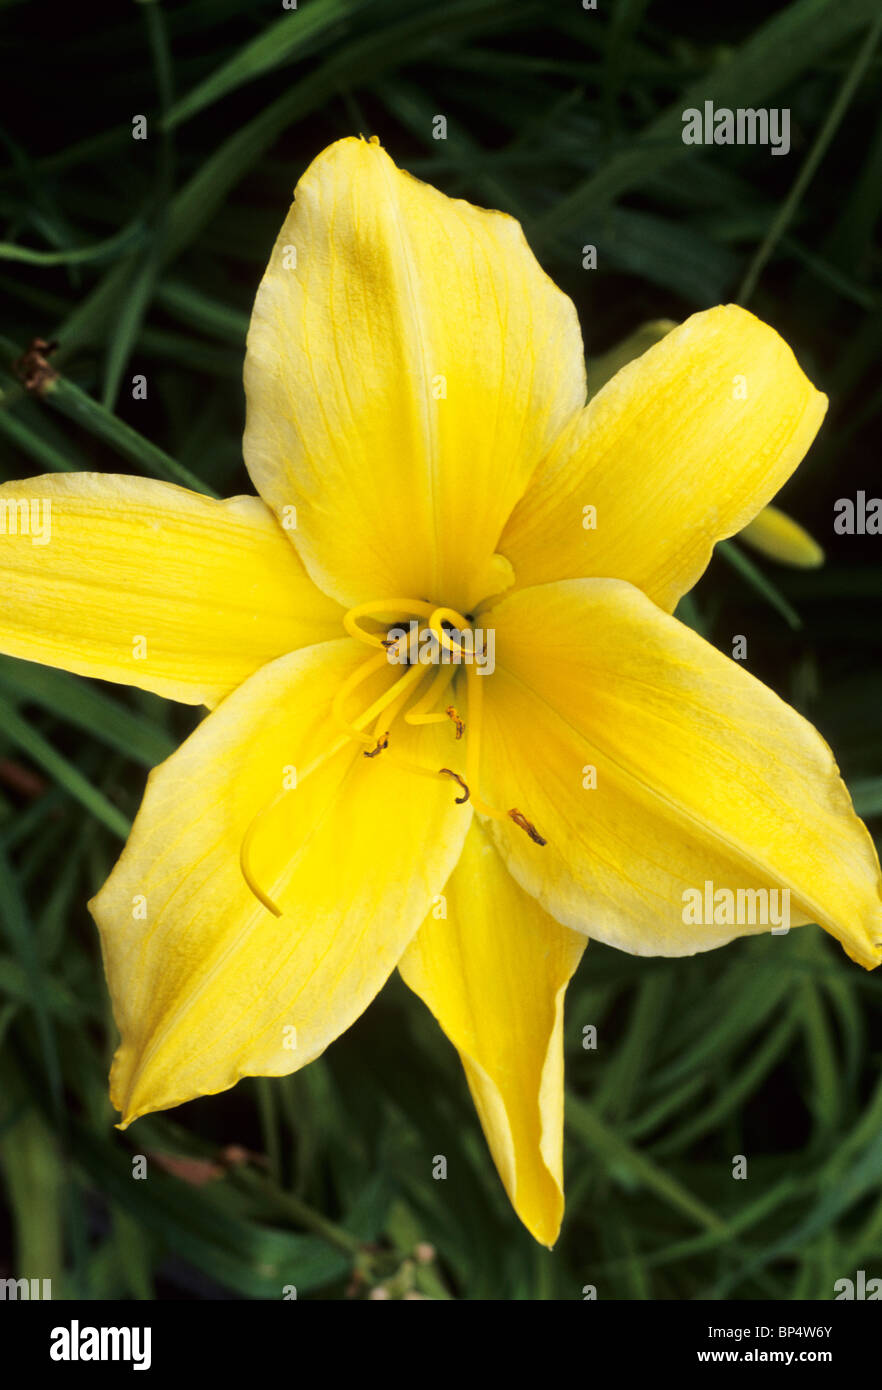 Hemerocallis 'Big Bird' day lily lilies yellow flower flowers garden plant plants Stock Photo